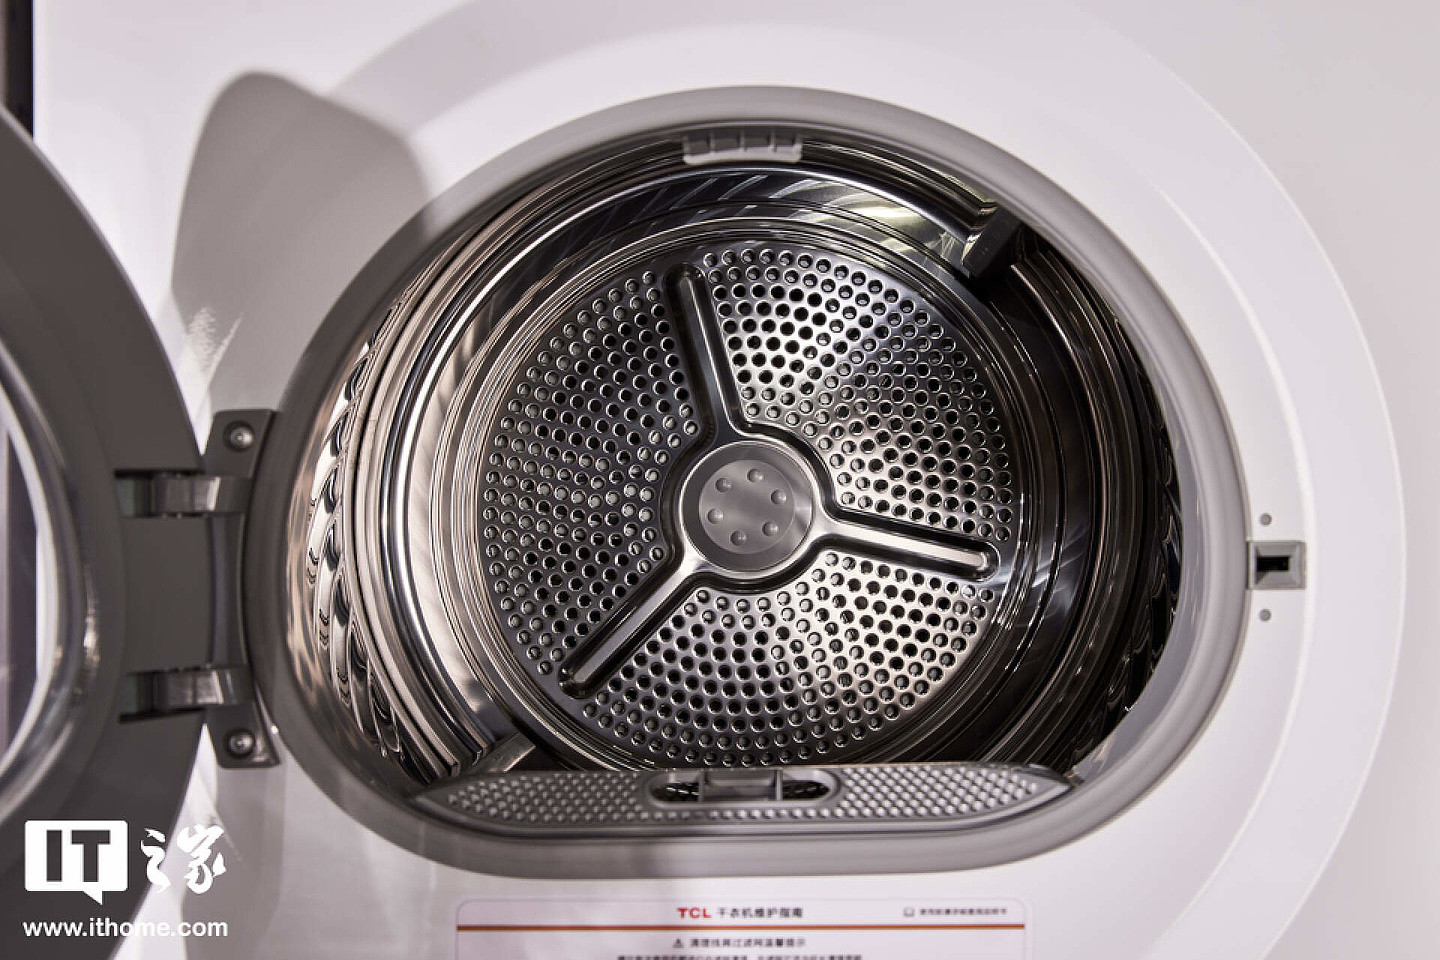 【IT之家评测室】TCL 双子舱洗烘护集成机 T10 体验：比洗烘套装更“友好”，比洗烘一体机更“实用” - 16